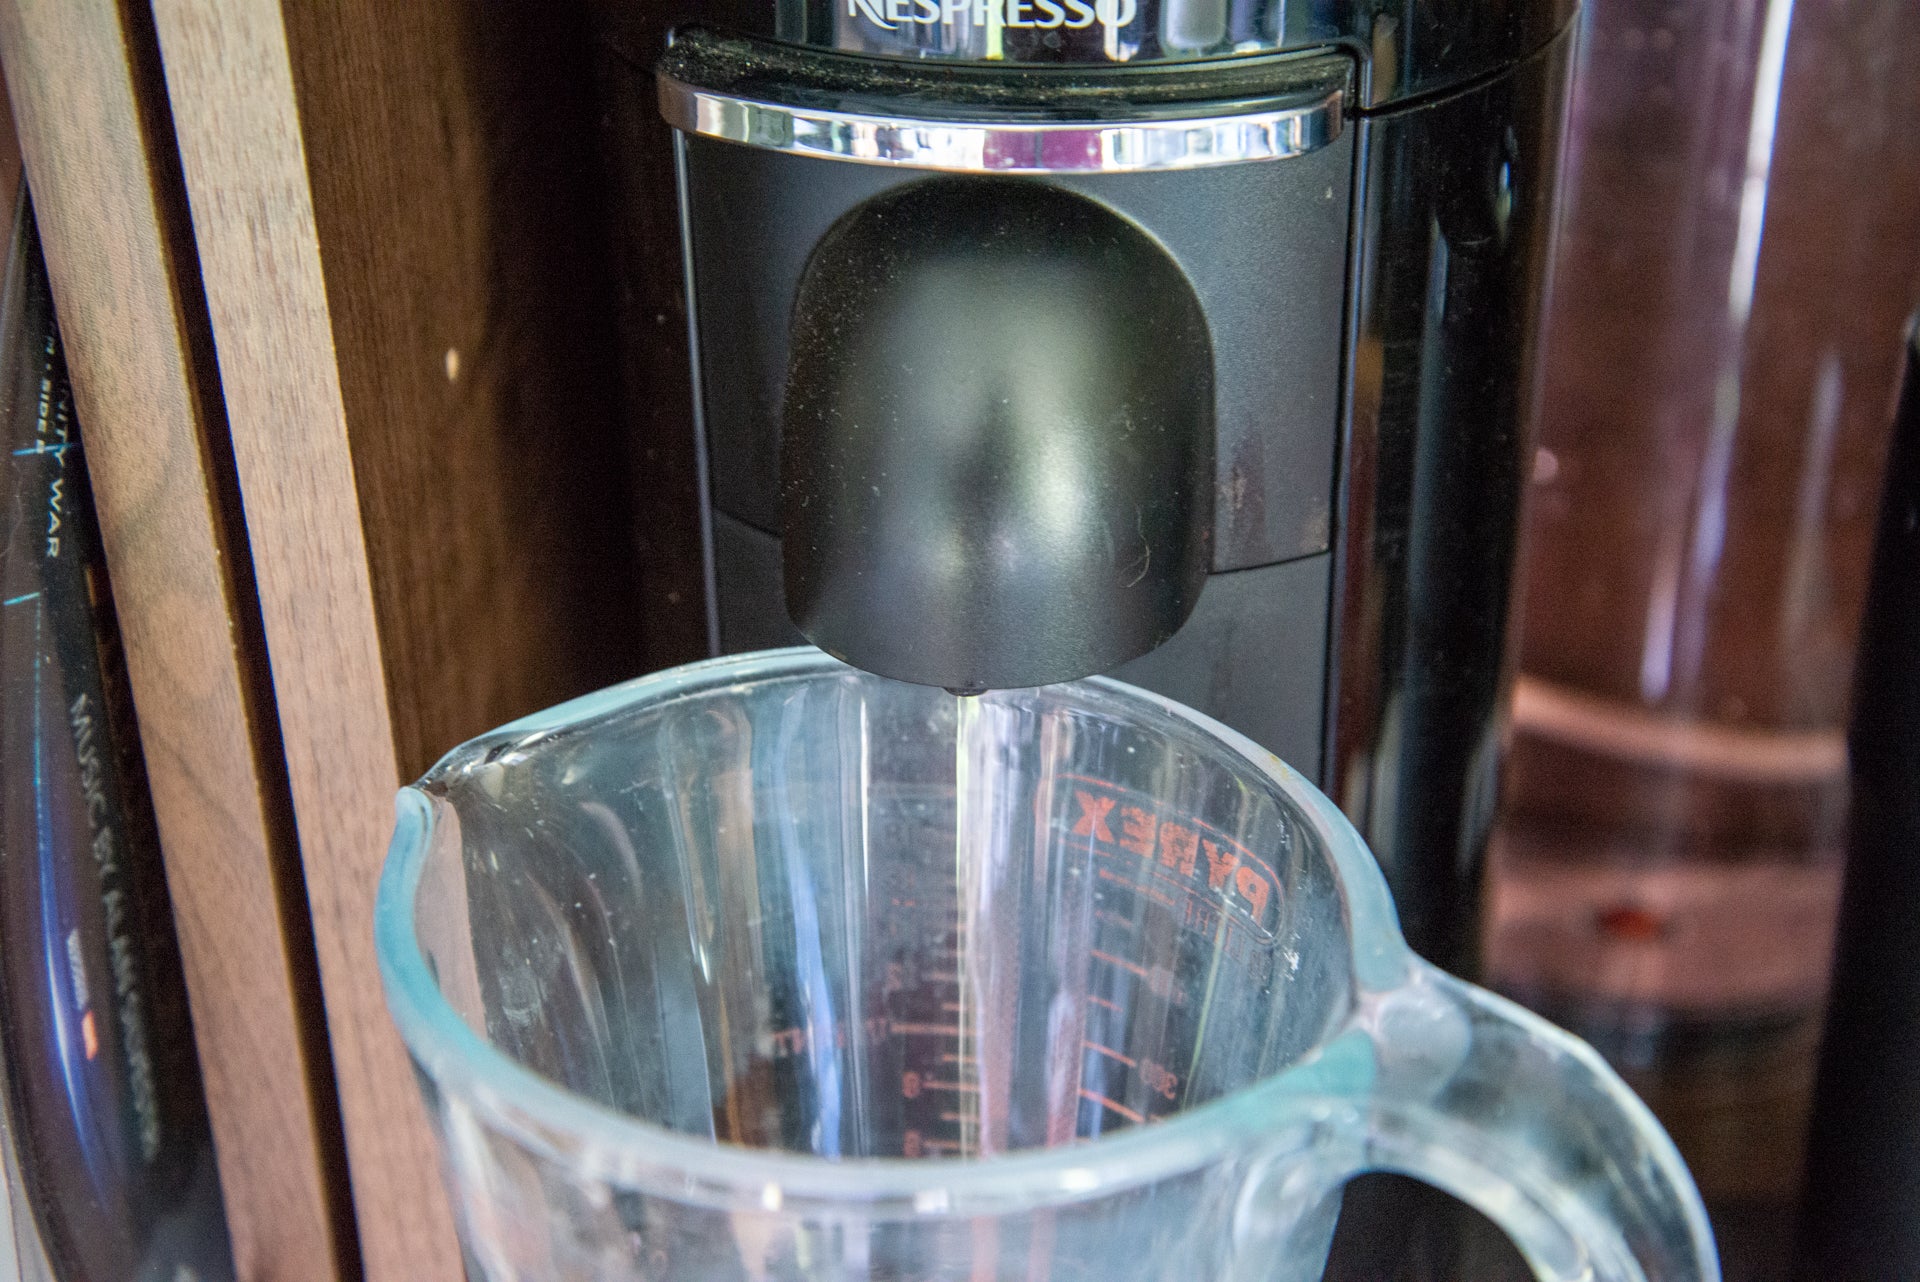 Nespresso water container